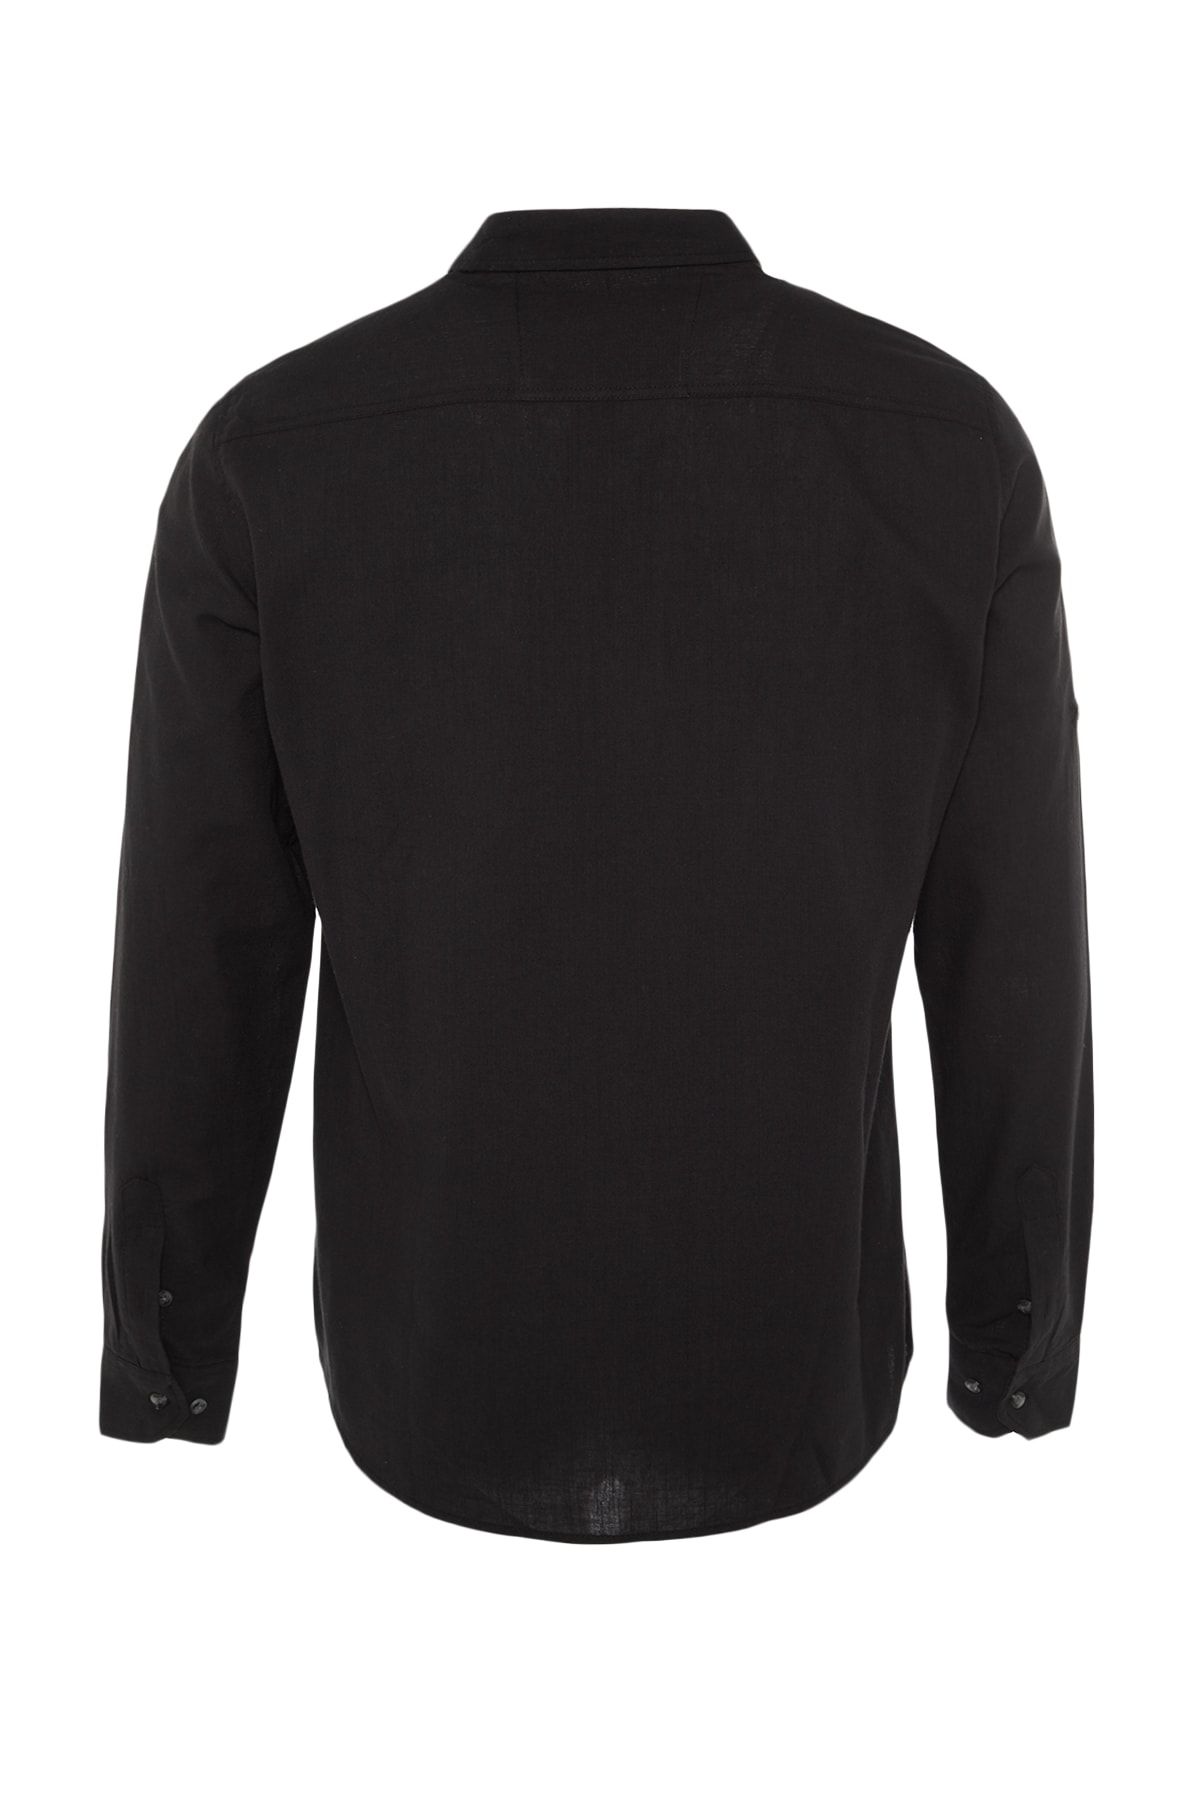 Trendyol Collection Shirt - Black - Slim fit - Trendyol